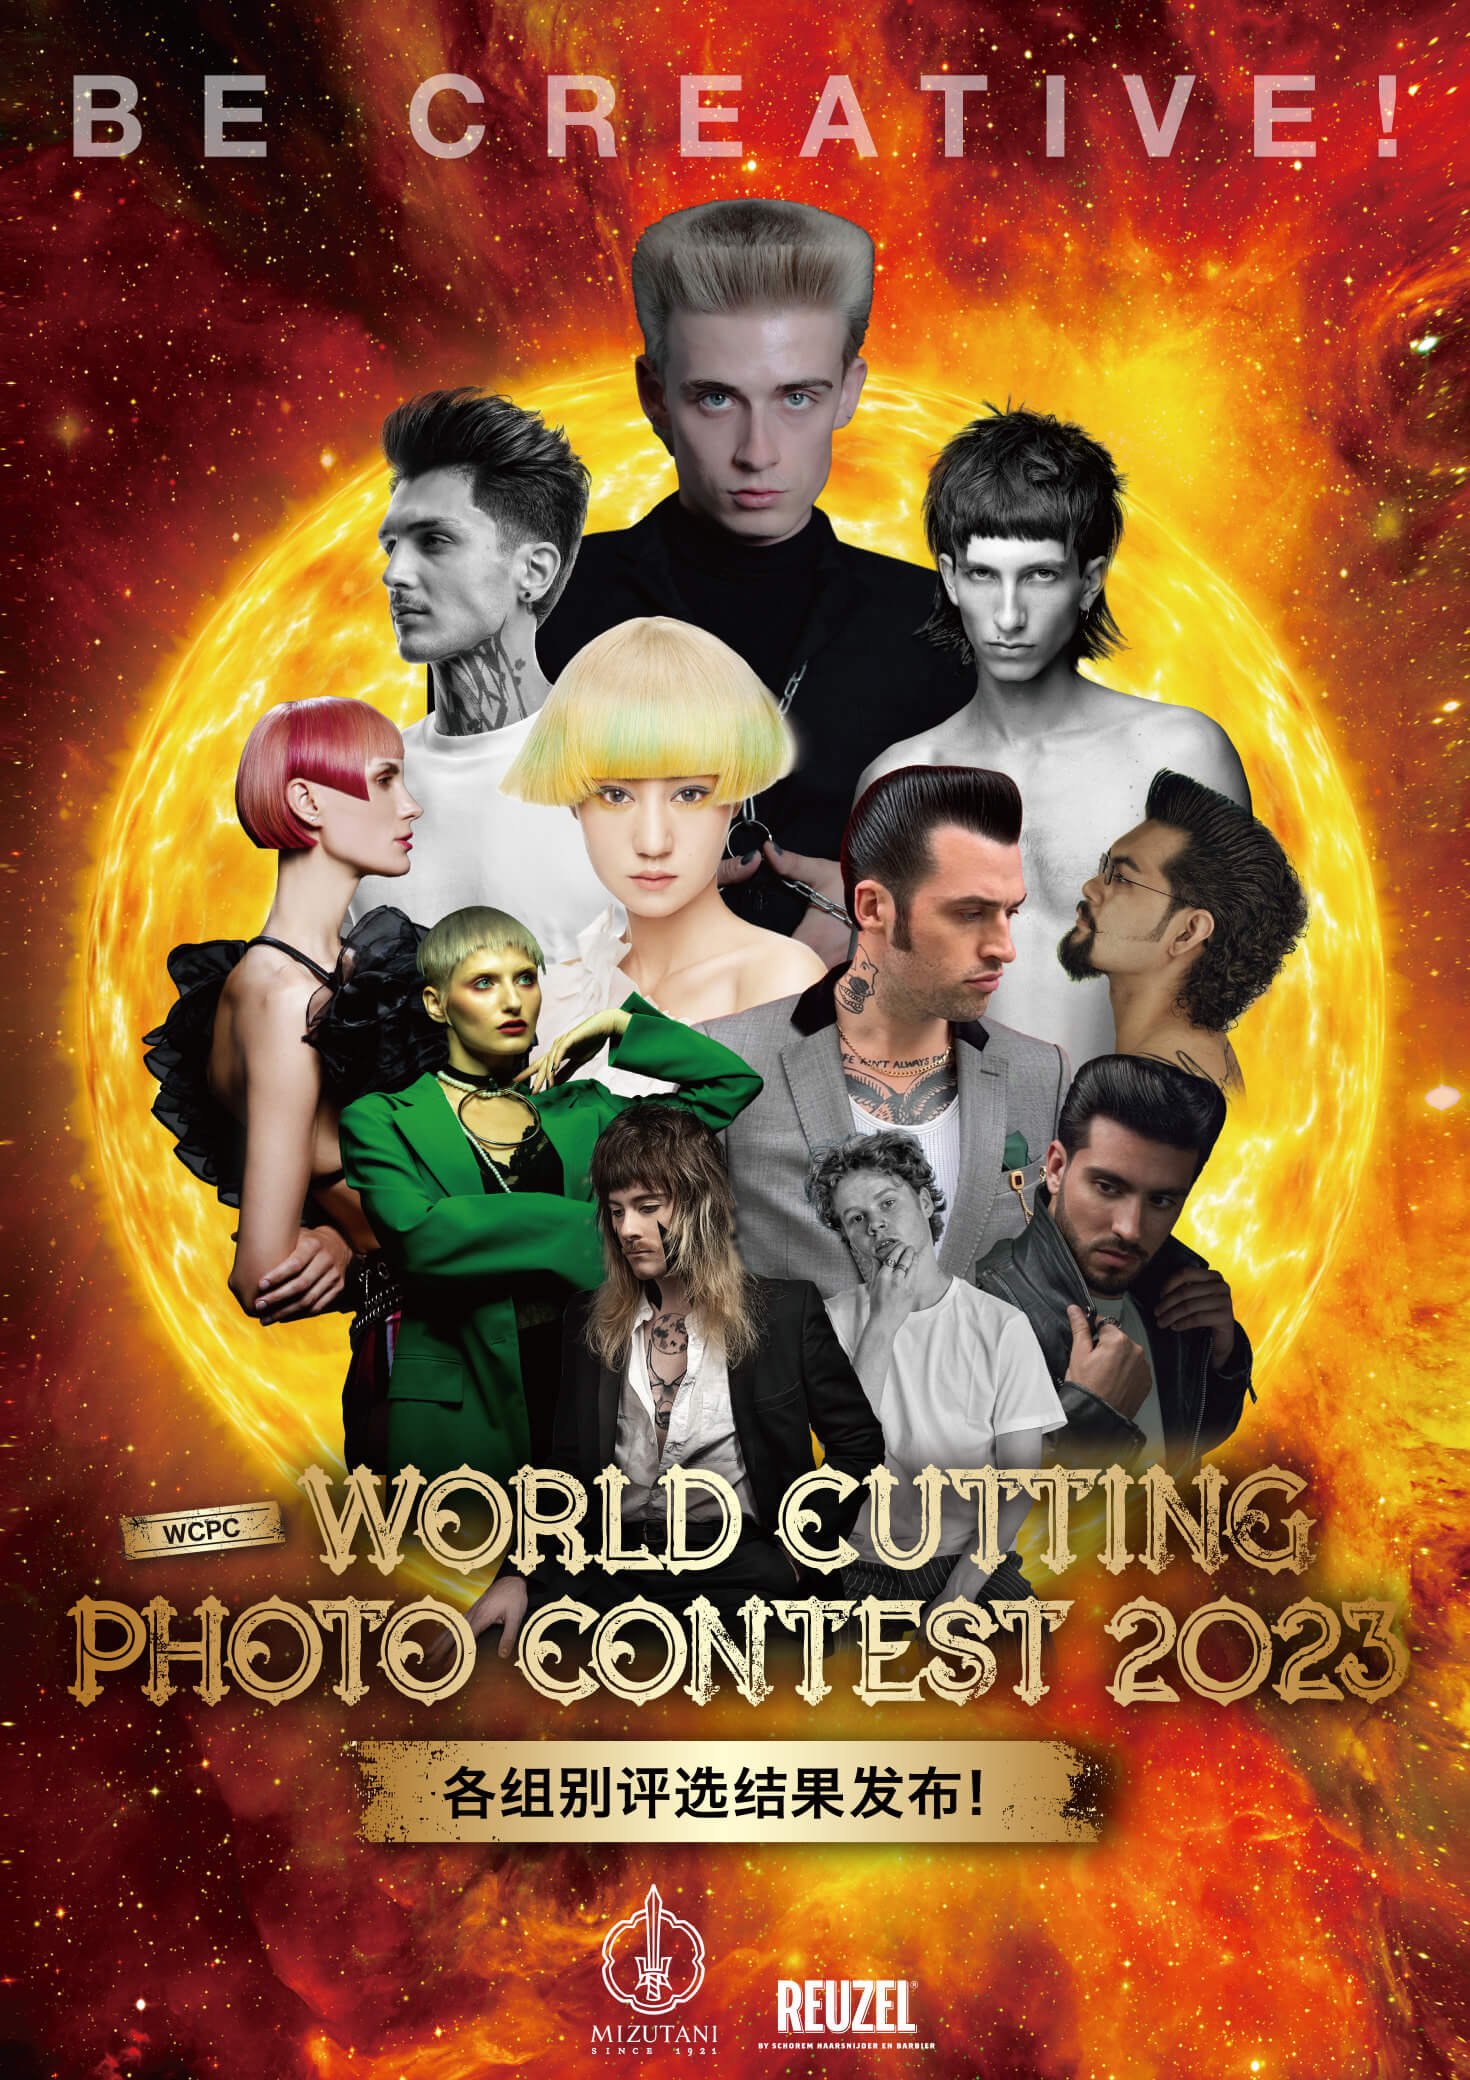 WORLD CUTTING PHOTO CONTEST 2023